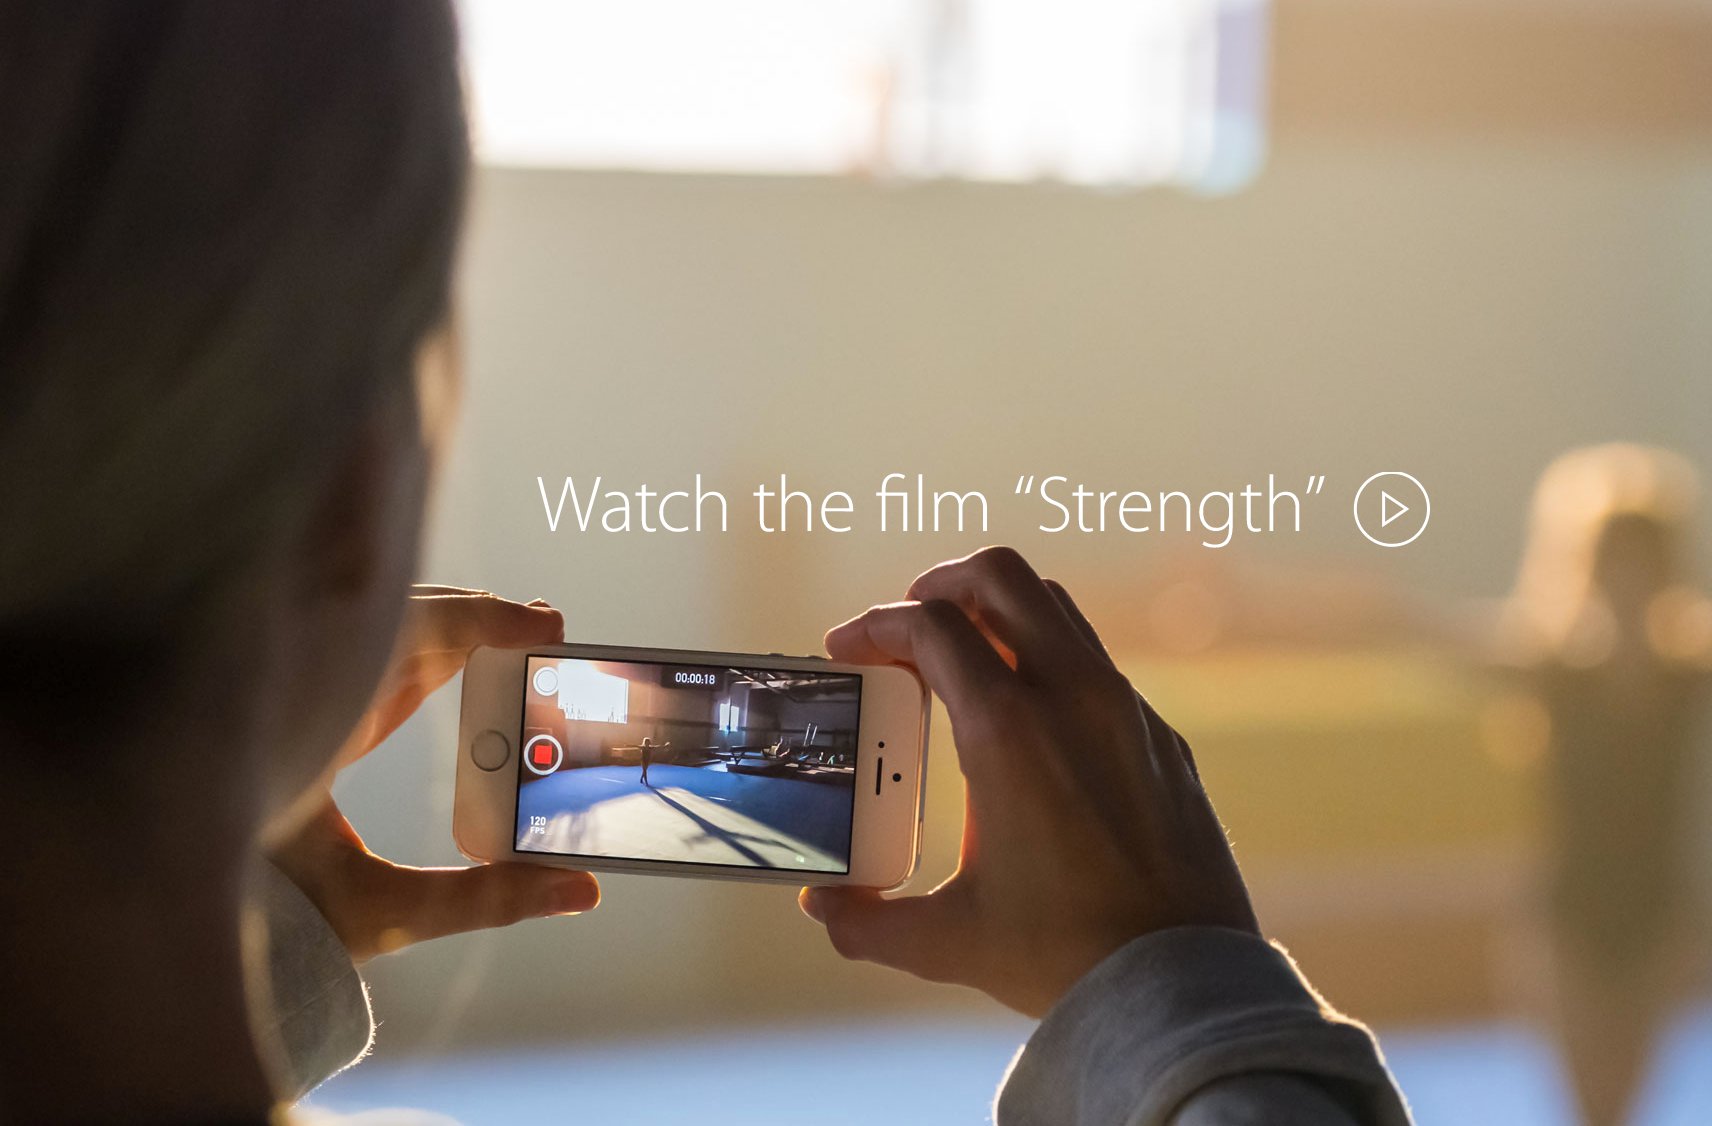 iPhone 5s Stärke: Fitness, Sport & Gesundheit im Fokus 10